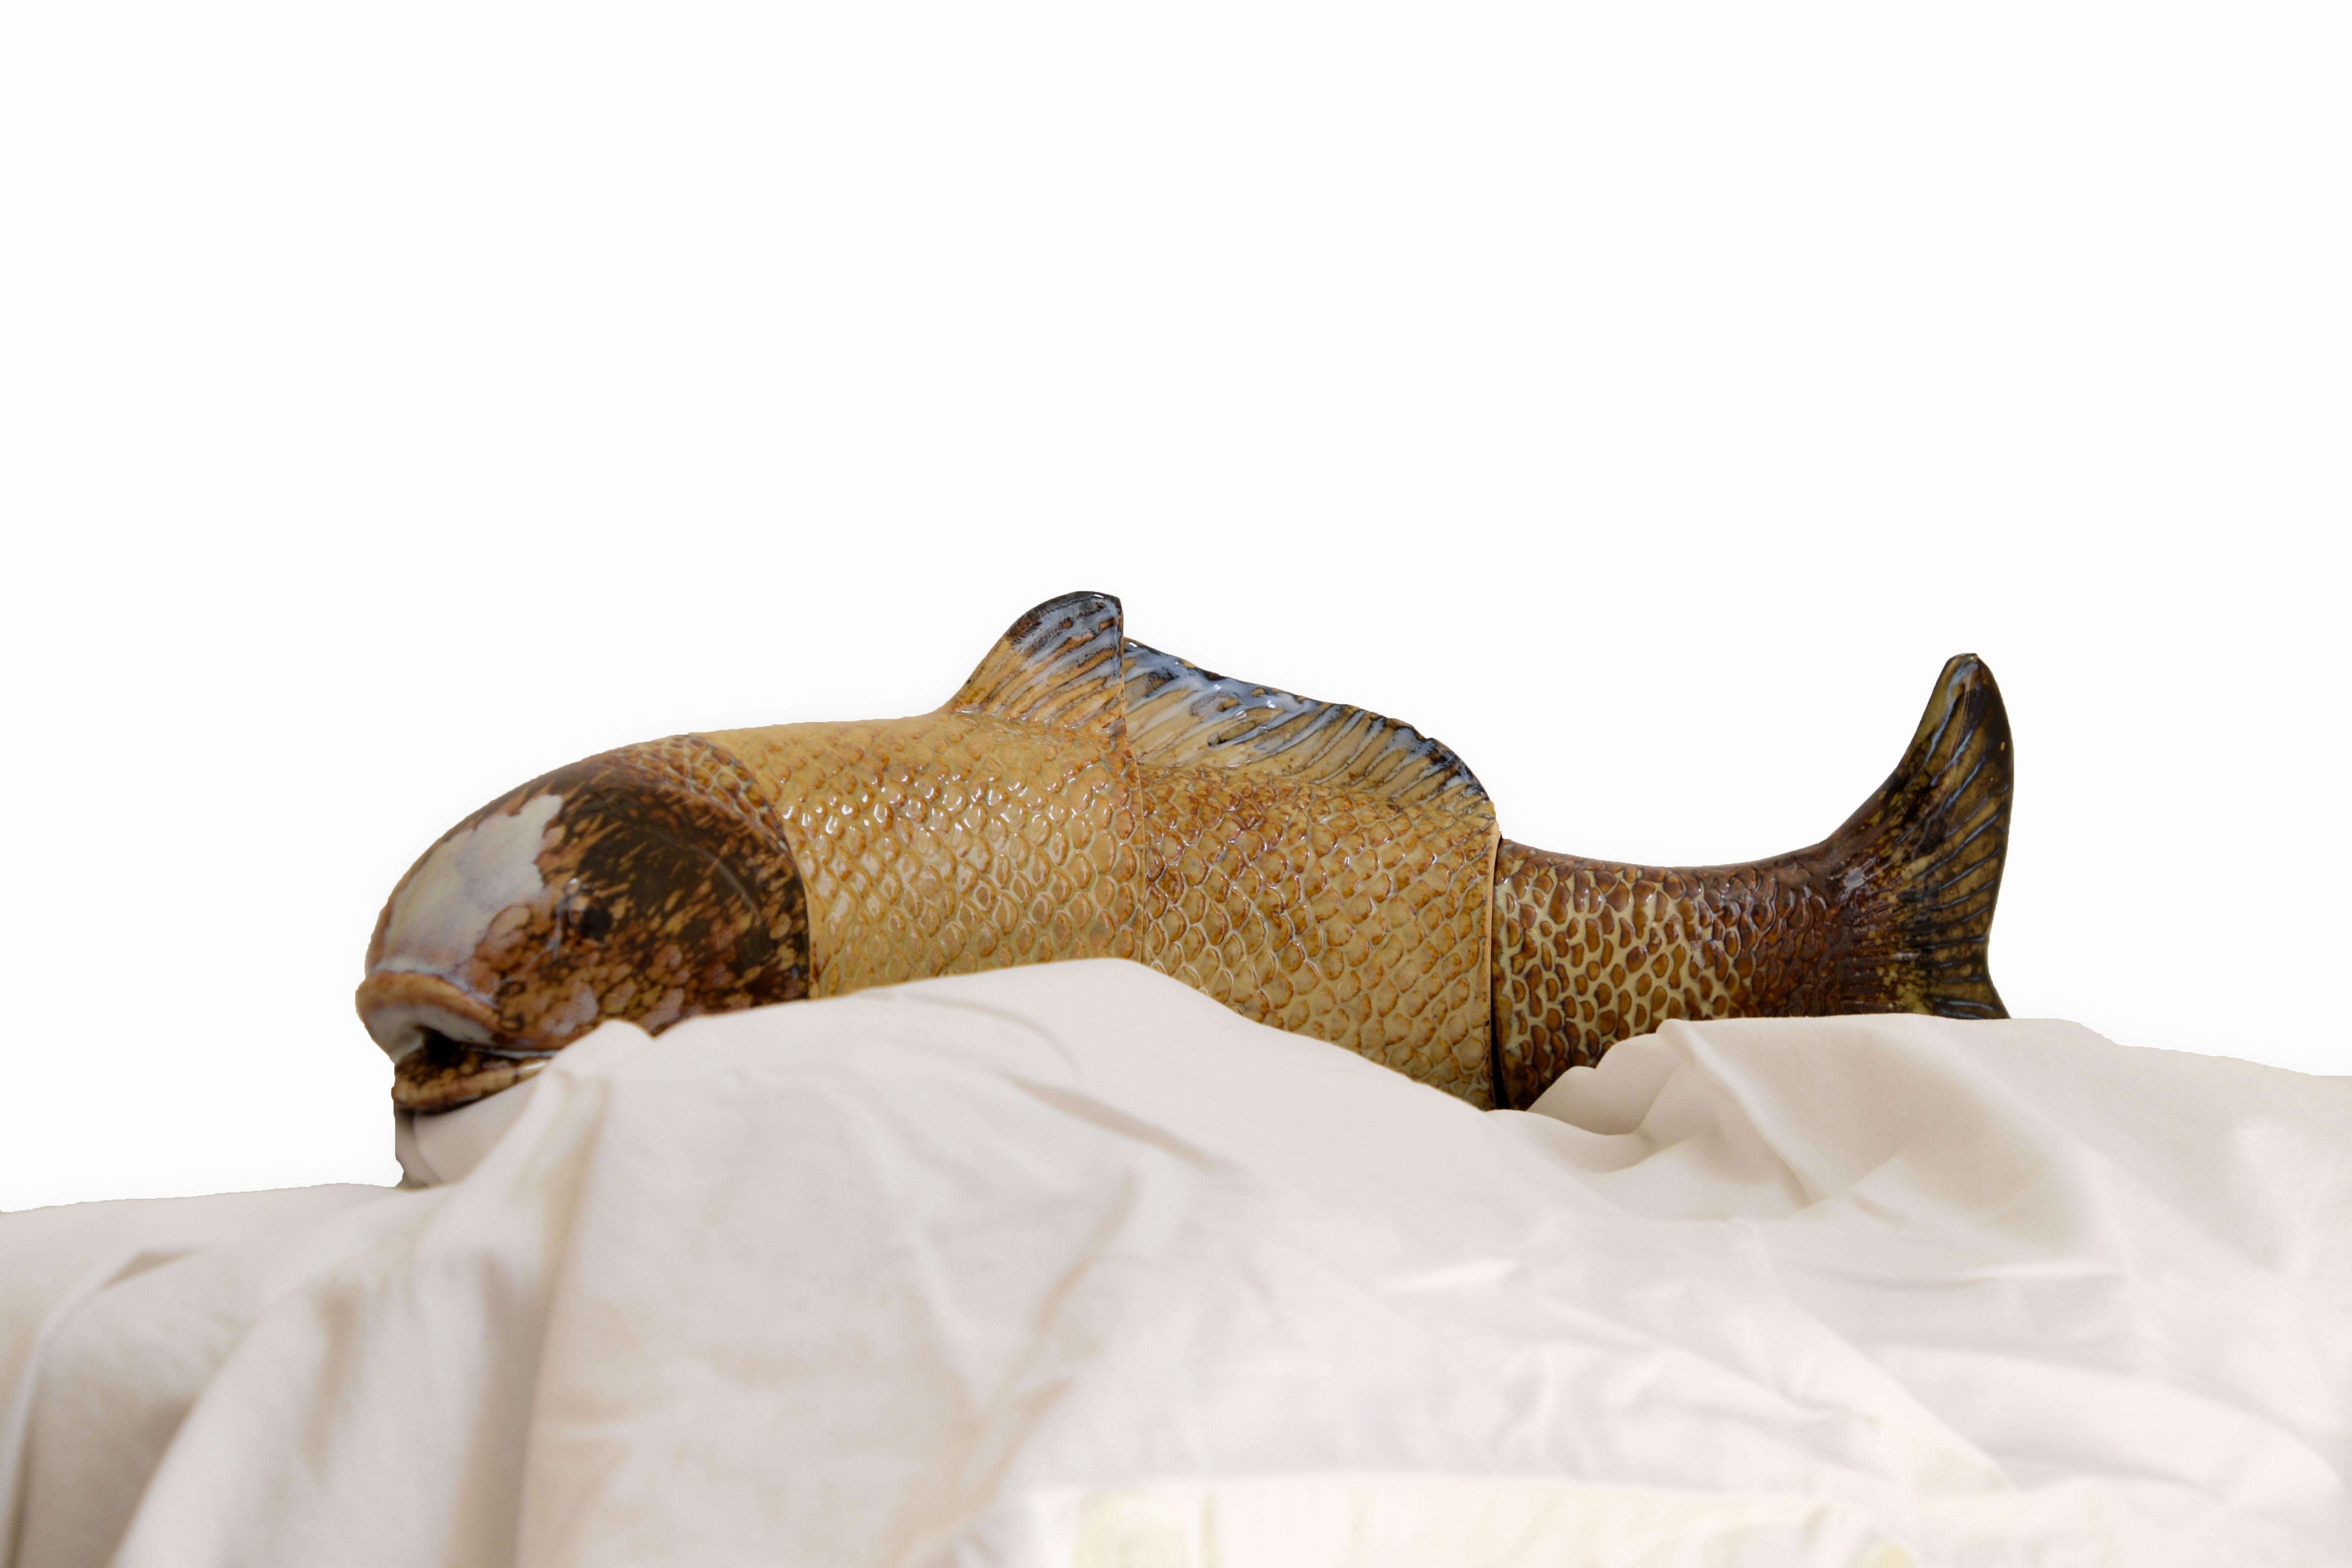 Danish Funny Fish Puzzel, Carp in 4 Pieces, Denmark